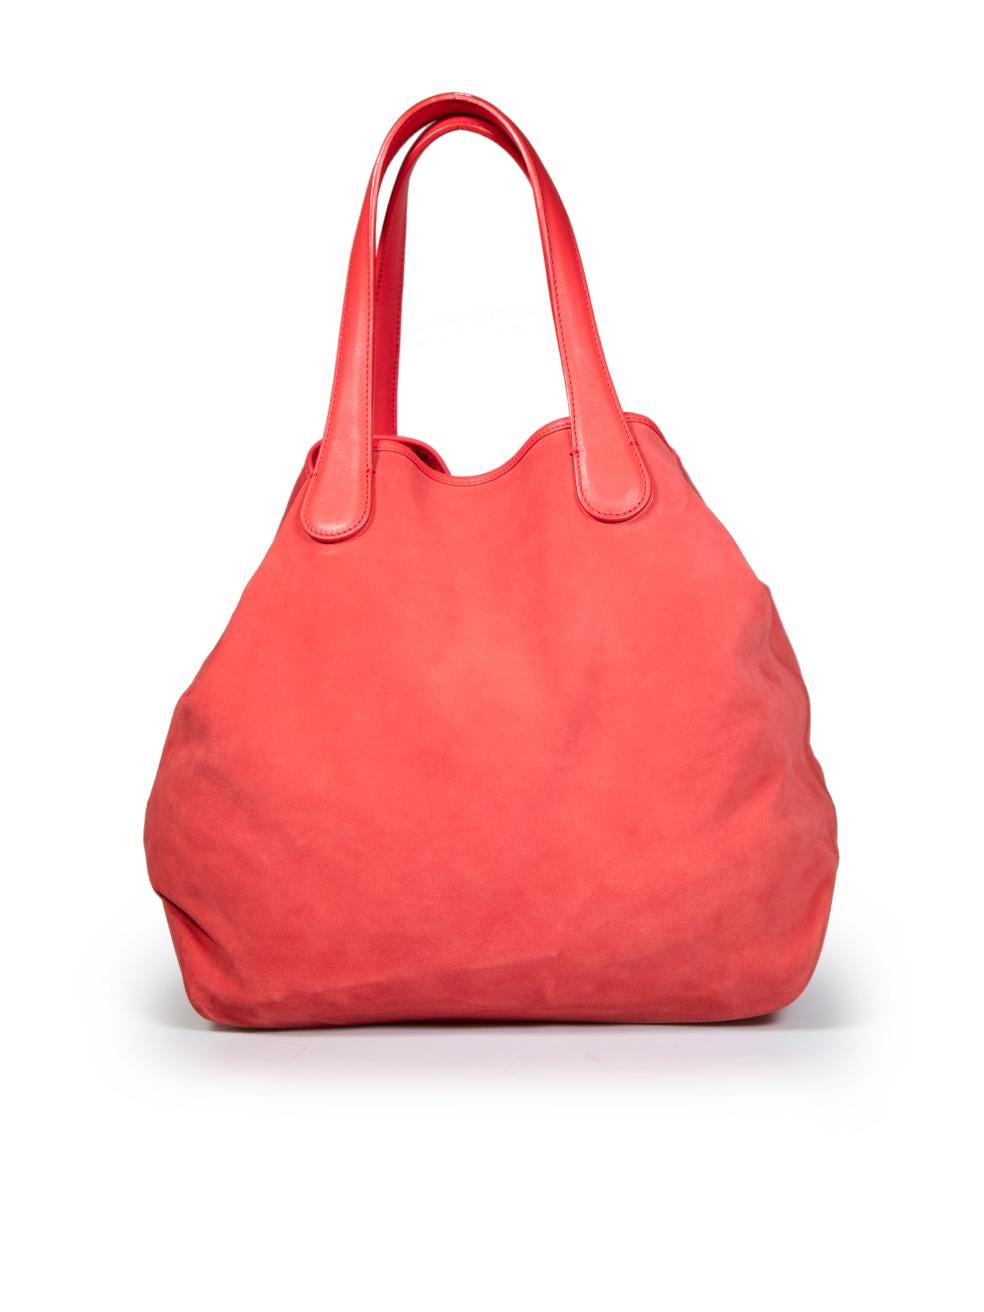 Giorgio Armani Red Suede Tote Bag In Good Condition For Sale In London, GB